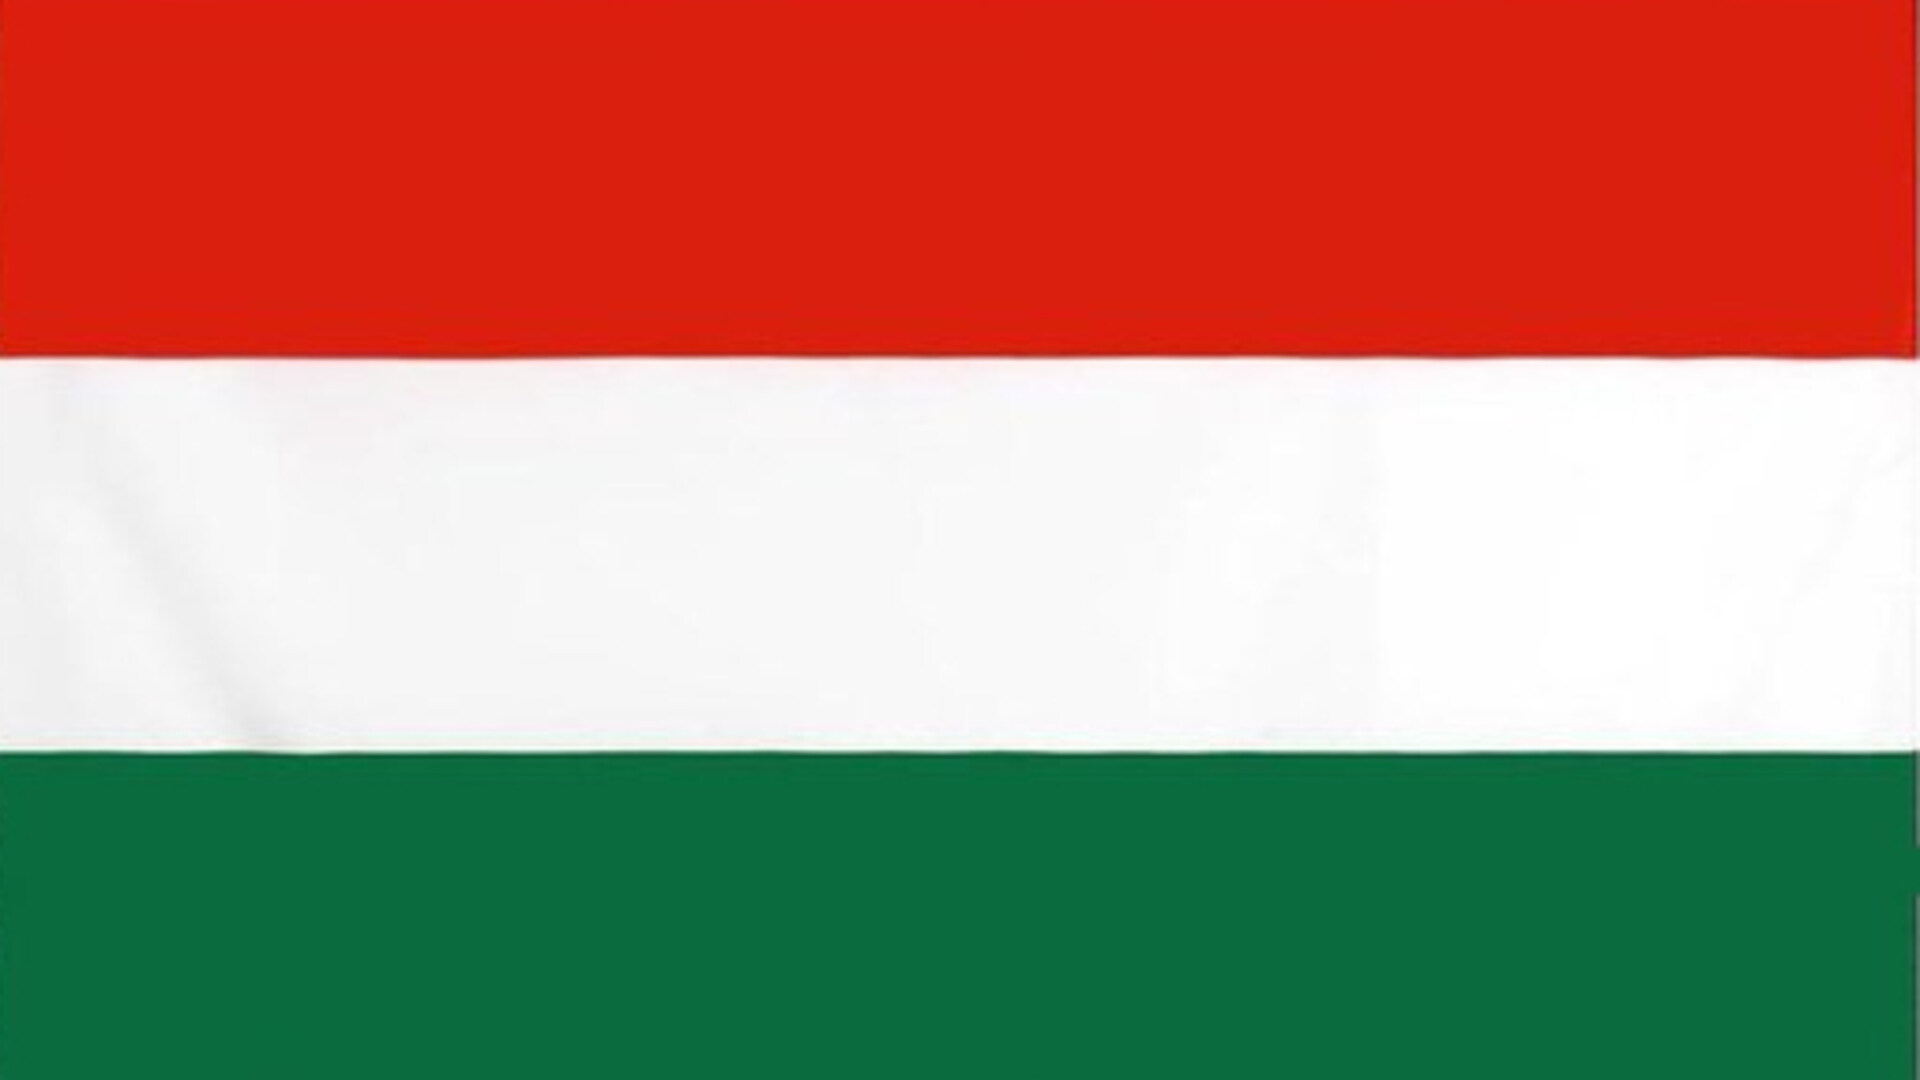 Hongaarse vlag met drie horizontale banen van rood, wit, groen